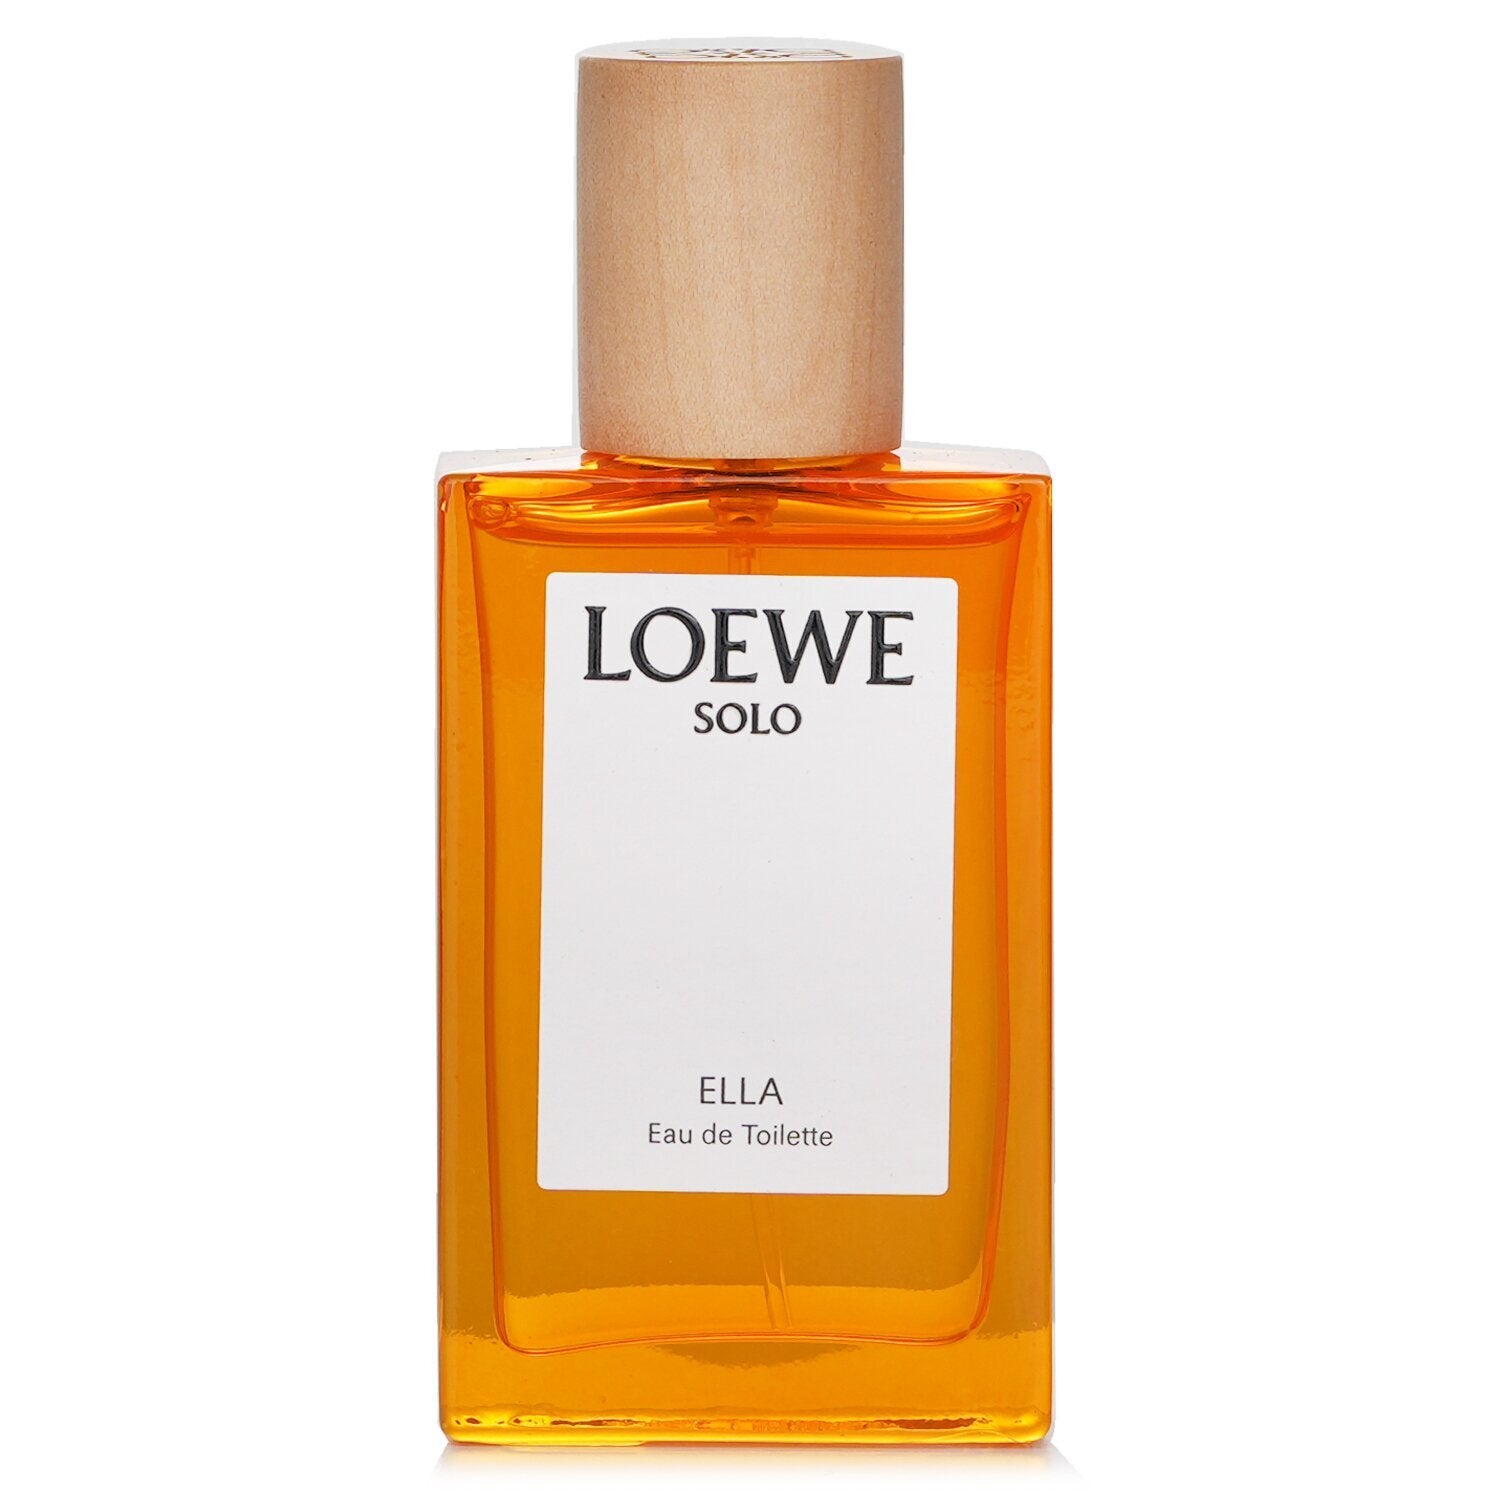 Photos - Women's Fragrance Loewe Solo Ella Eau de Toilette 30ml Spray - Peacock Bazaar J005481 